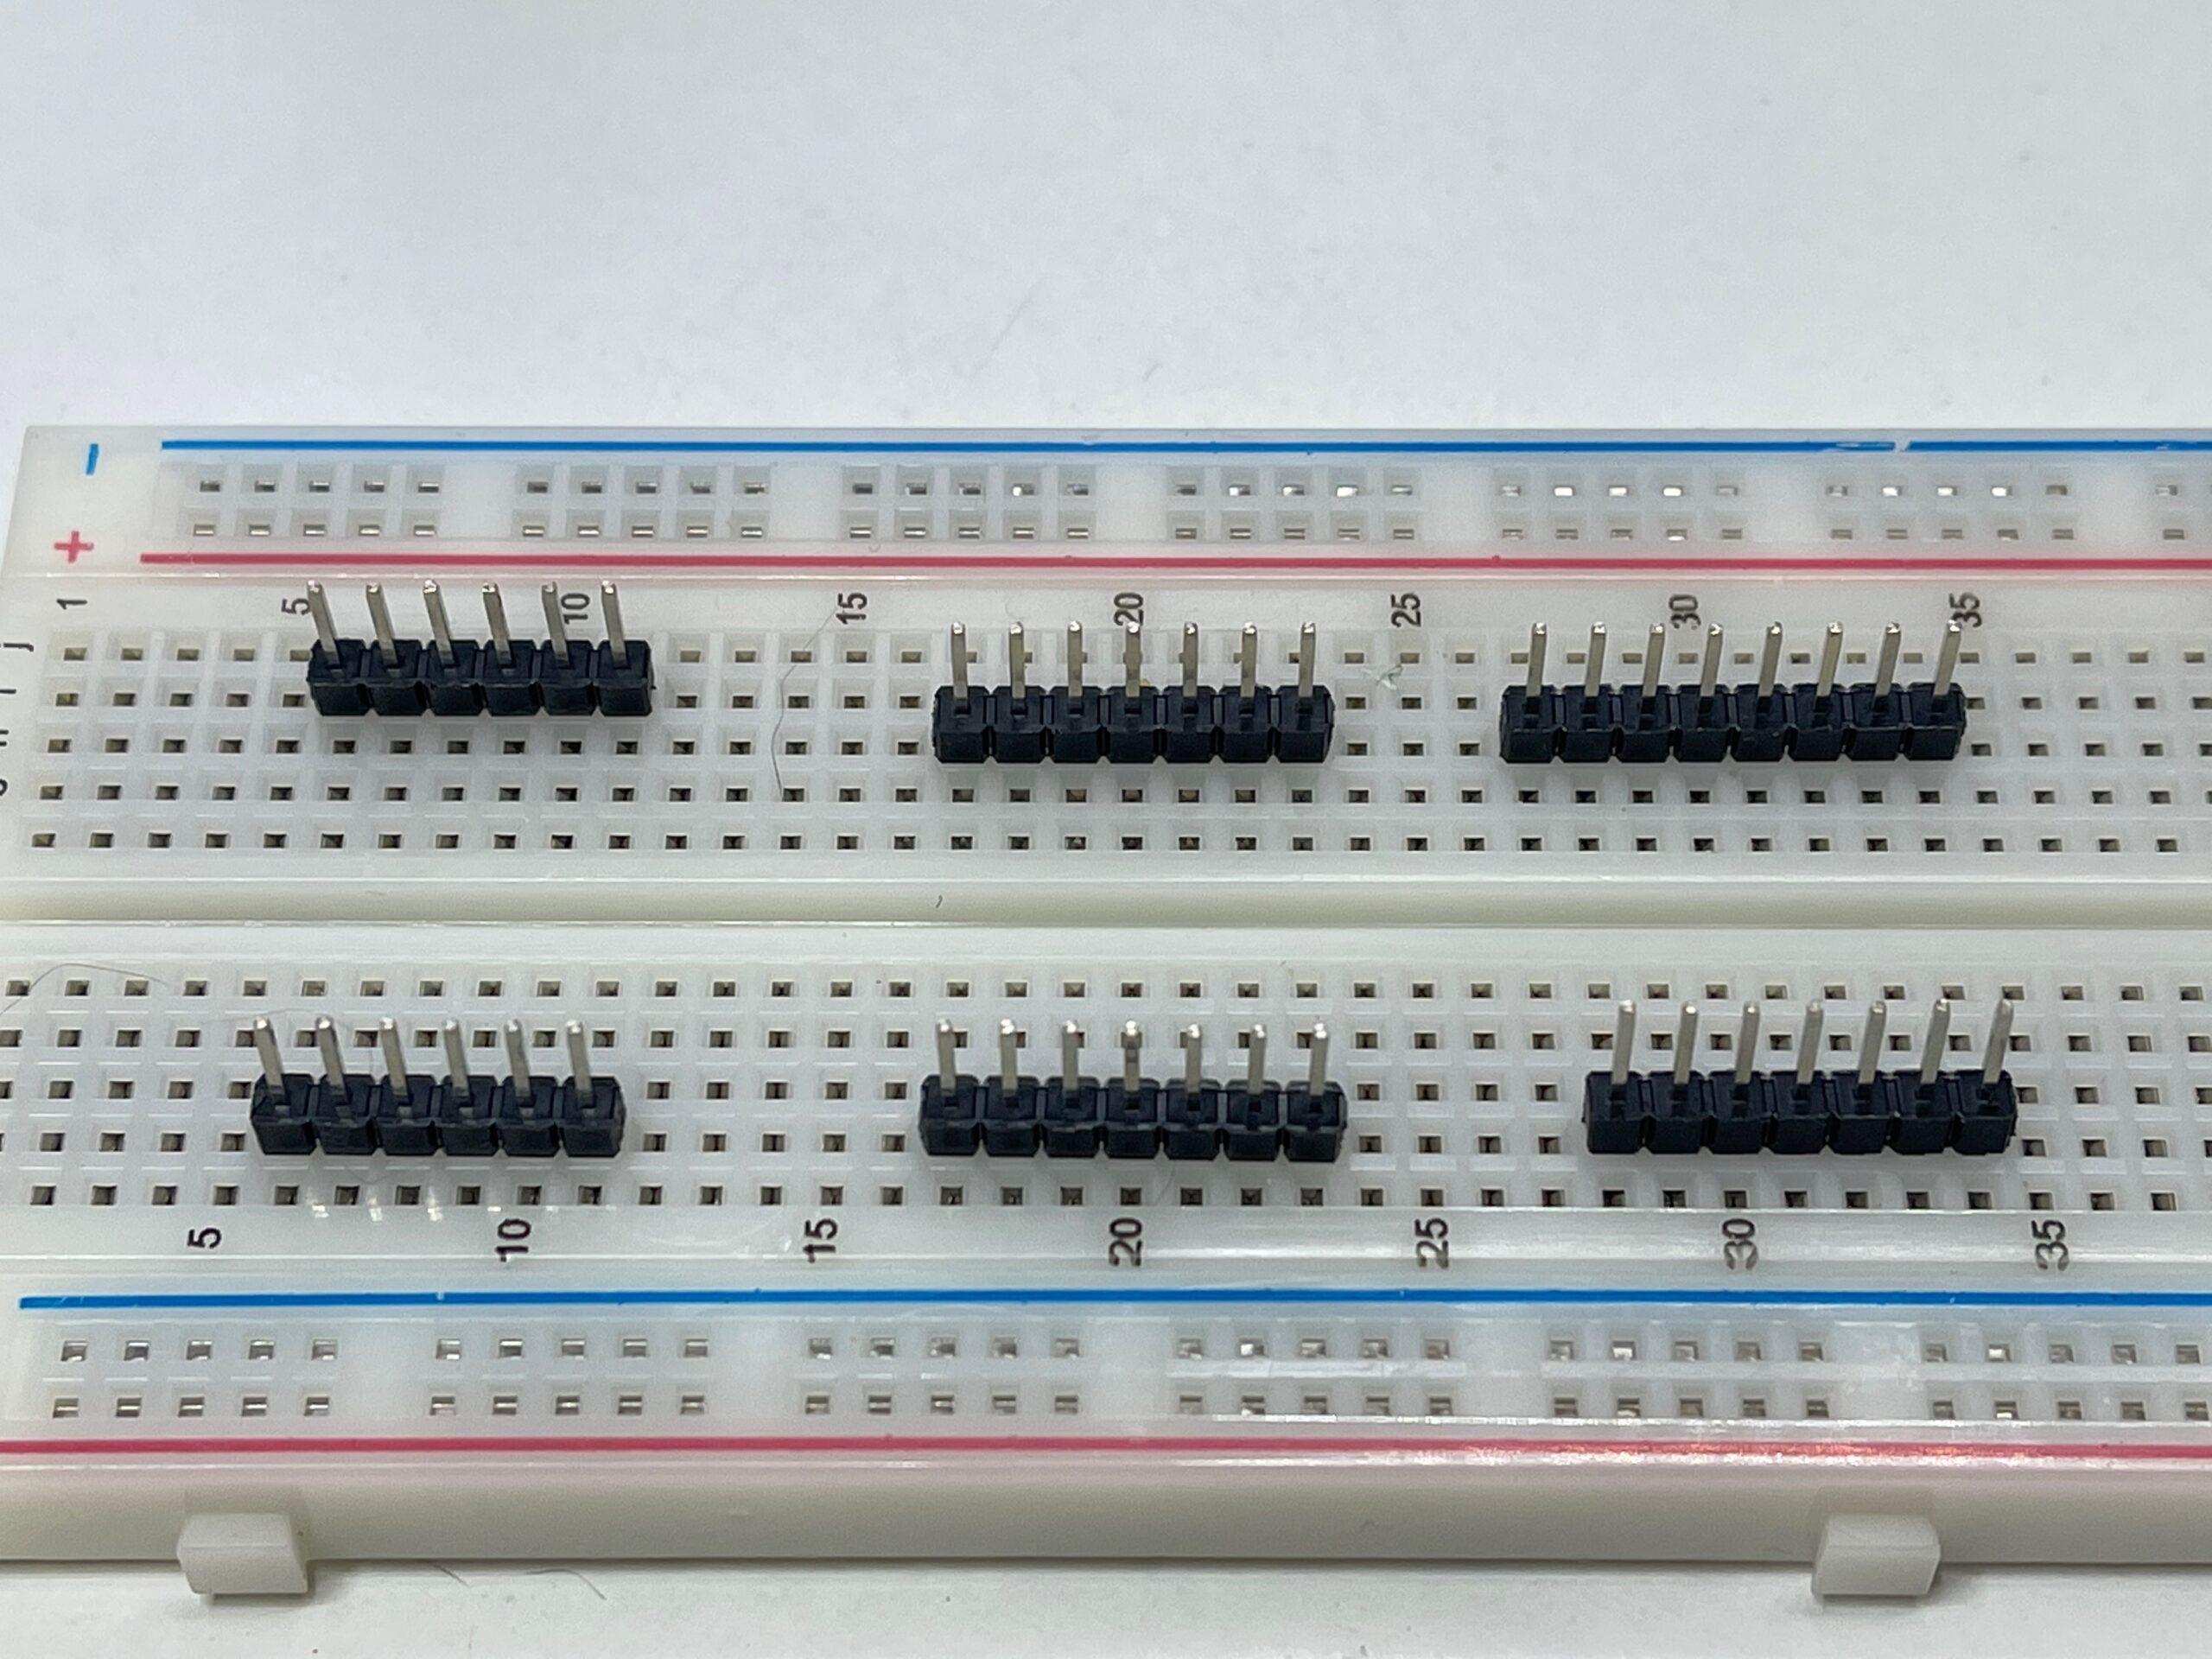 Fixture sensor pins in breadboard